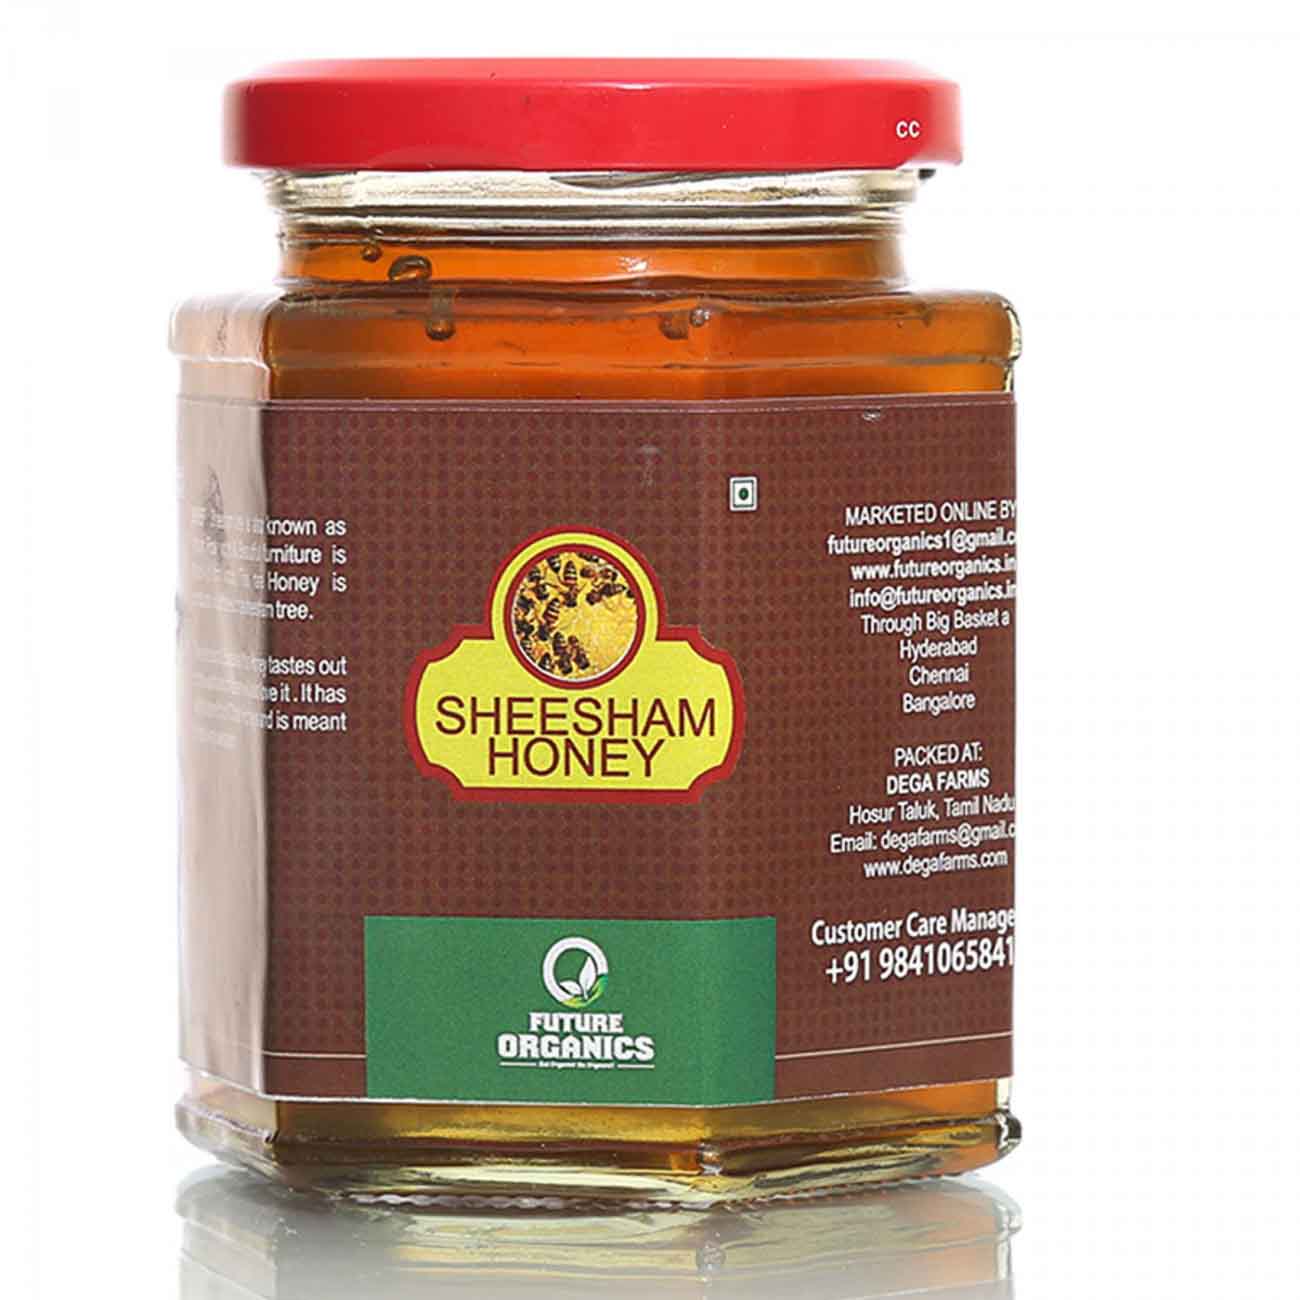 Future organics honey